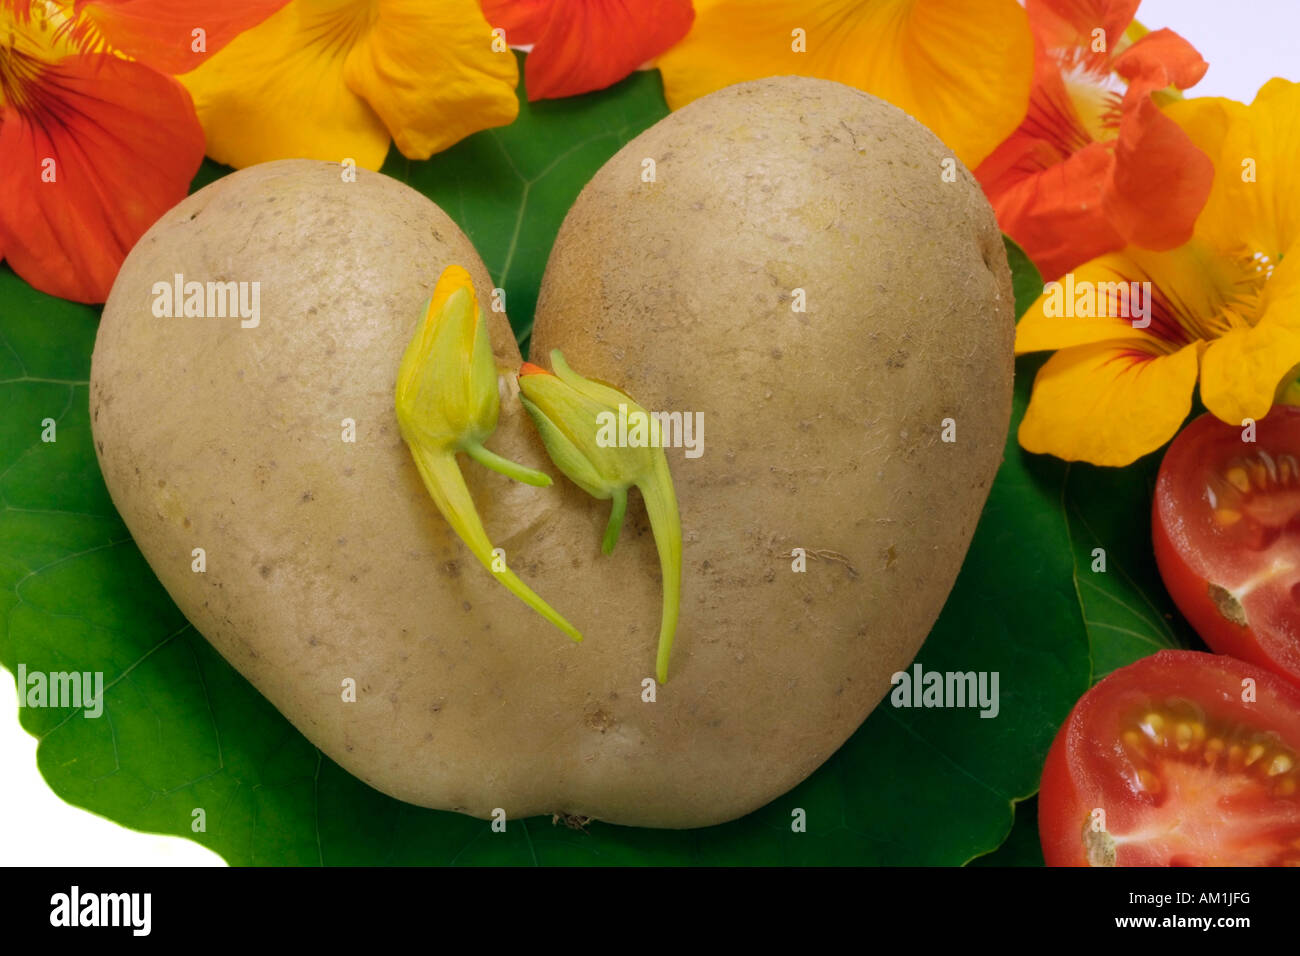 Heart shaped potatoe with Indian cress Stock Photo